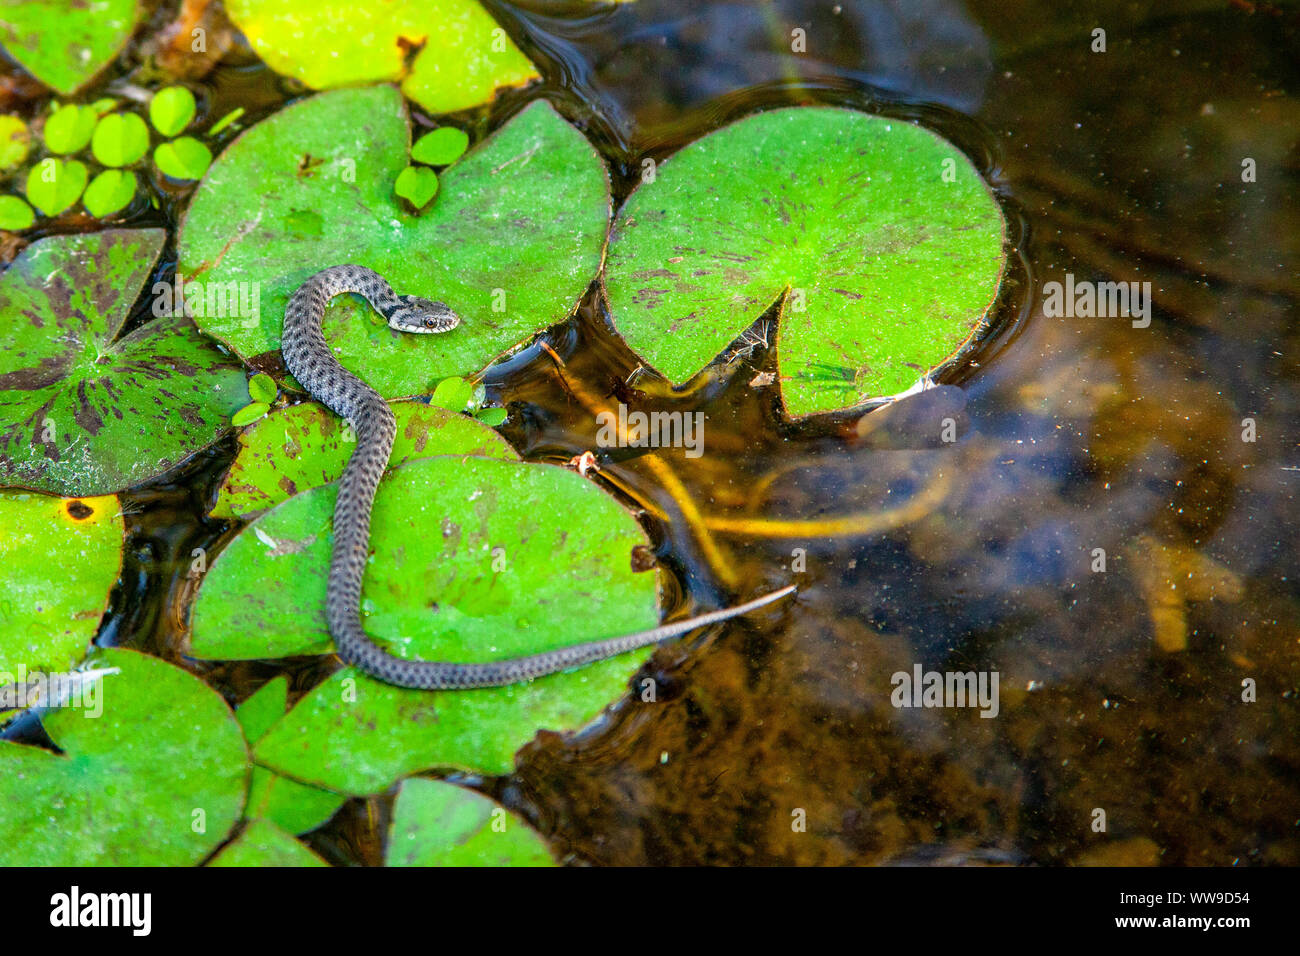 Dice snake (Natrix tessellata) Stock Photo